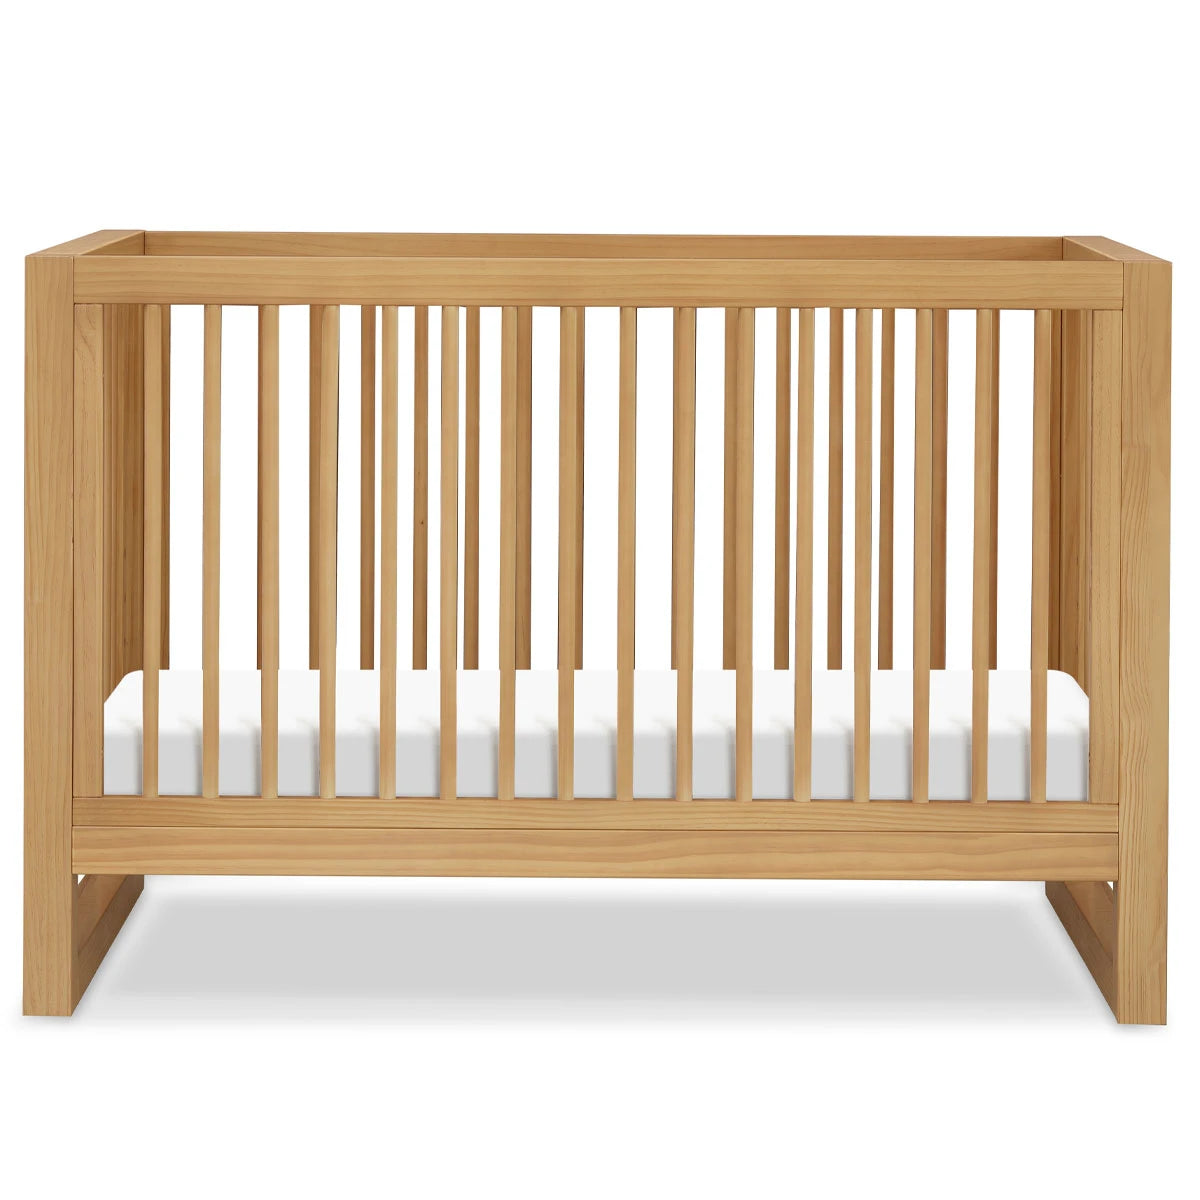 Honey - Namesake Nantucket 3-in-1 Convertible Crib with Toddler Bed Conversion Kit 2